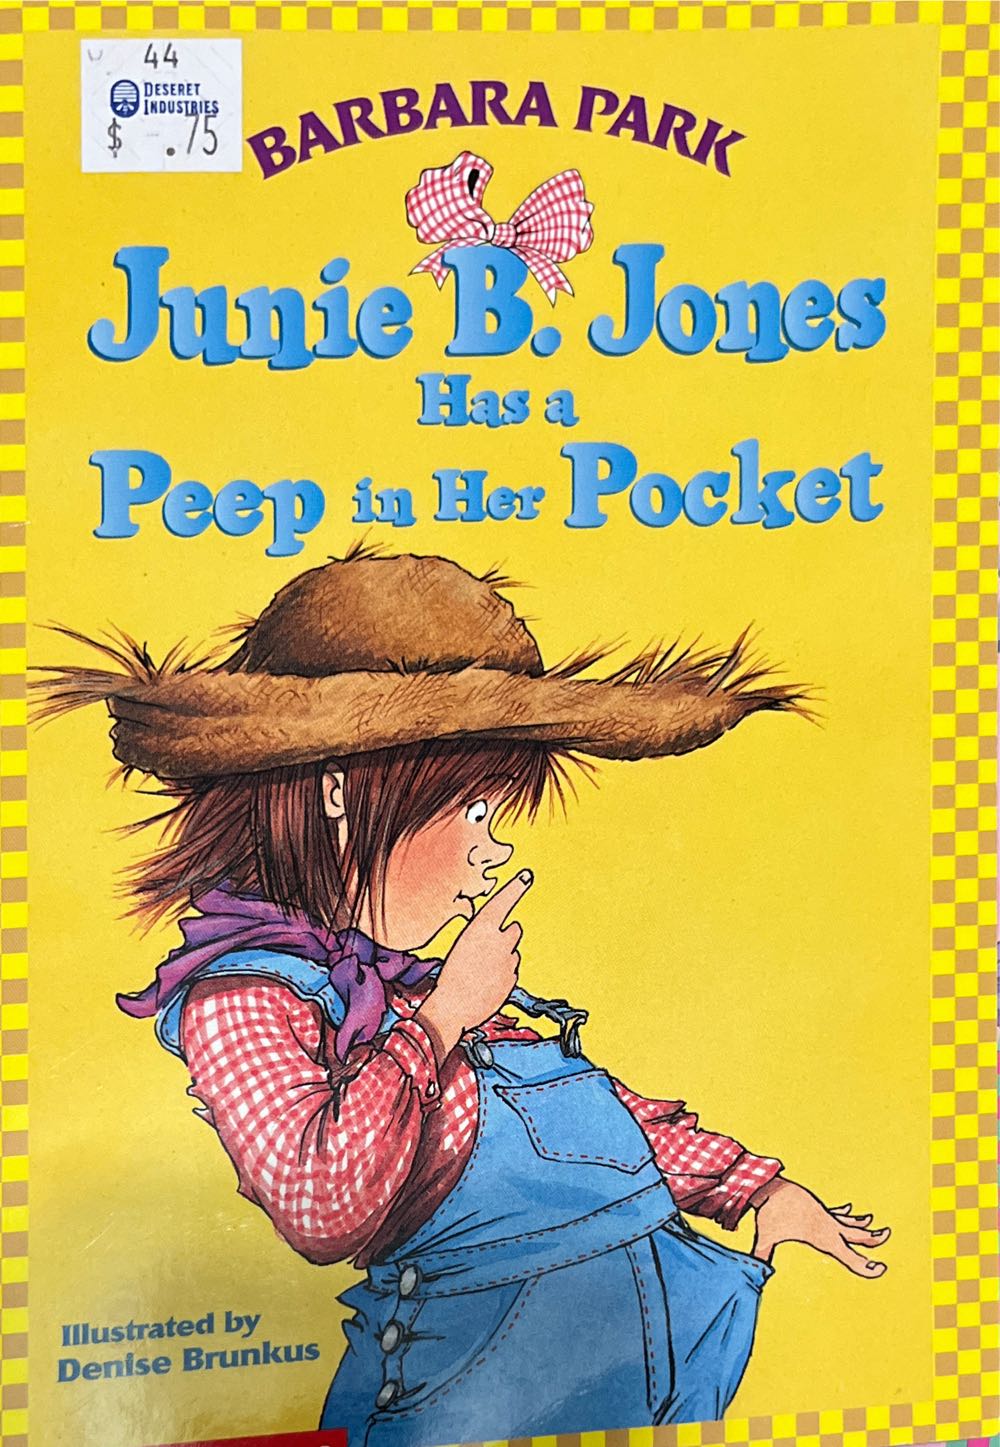 Junie B. Jones #15 Has A Peep In Her Pocket - Barbara Park (Scholastic Inc. - Paperback) book collectible [Barcode 9780439223096] - Main Image 4